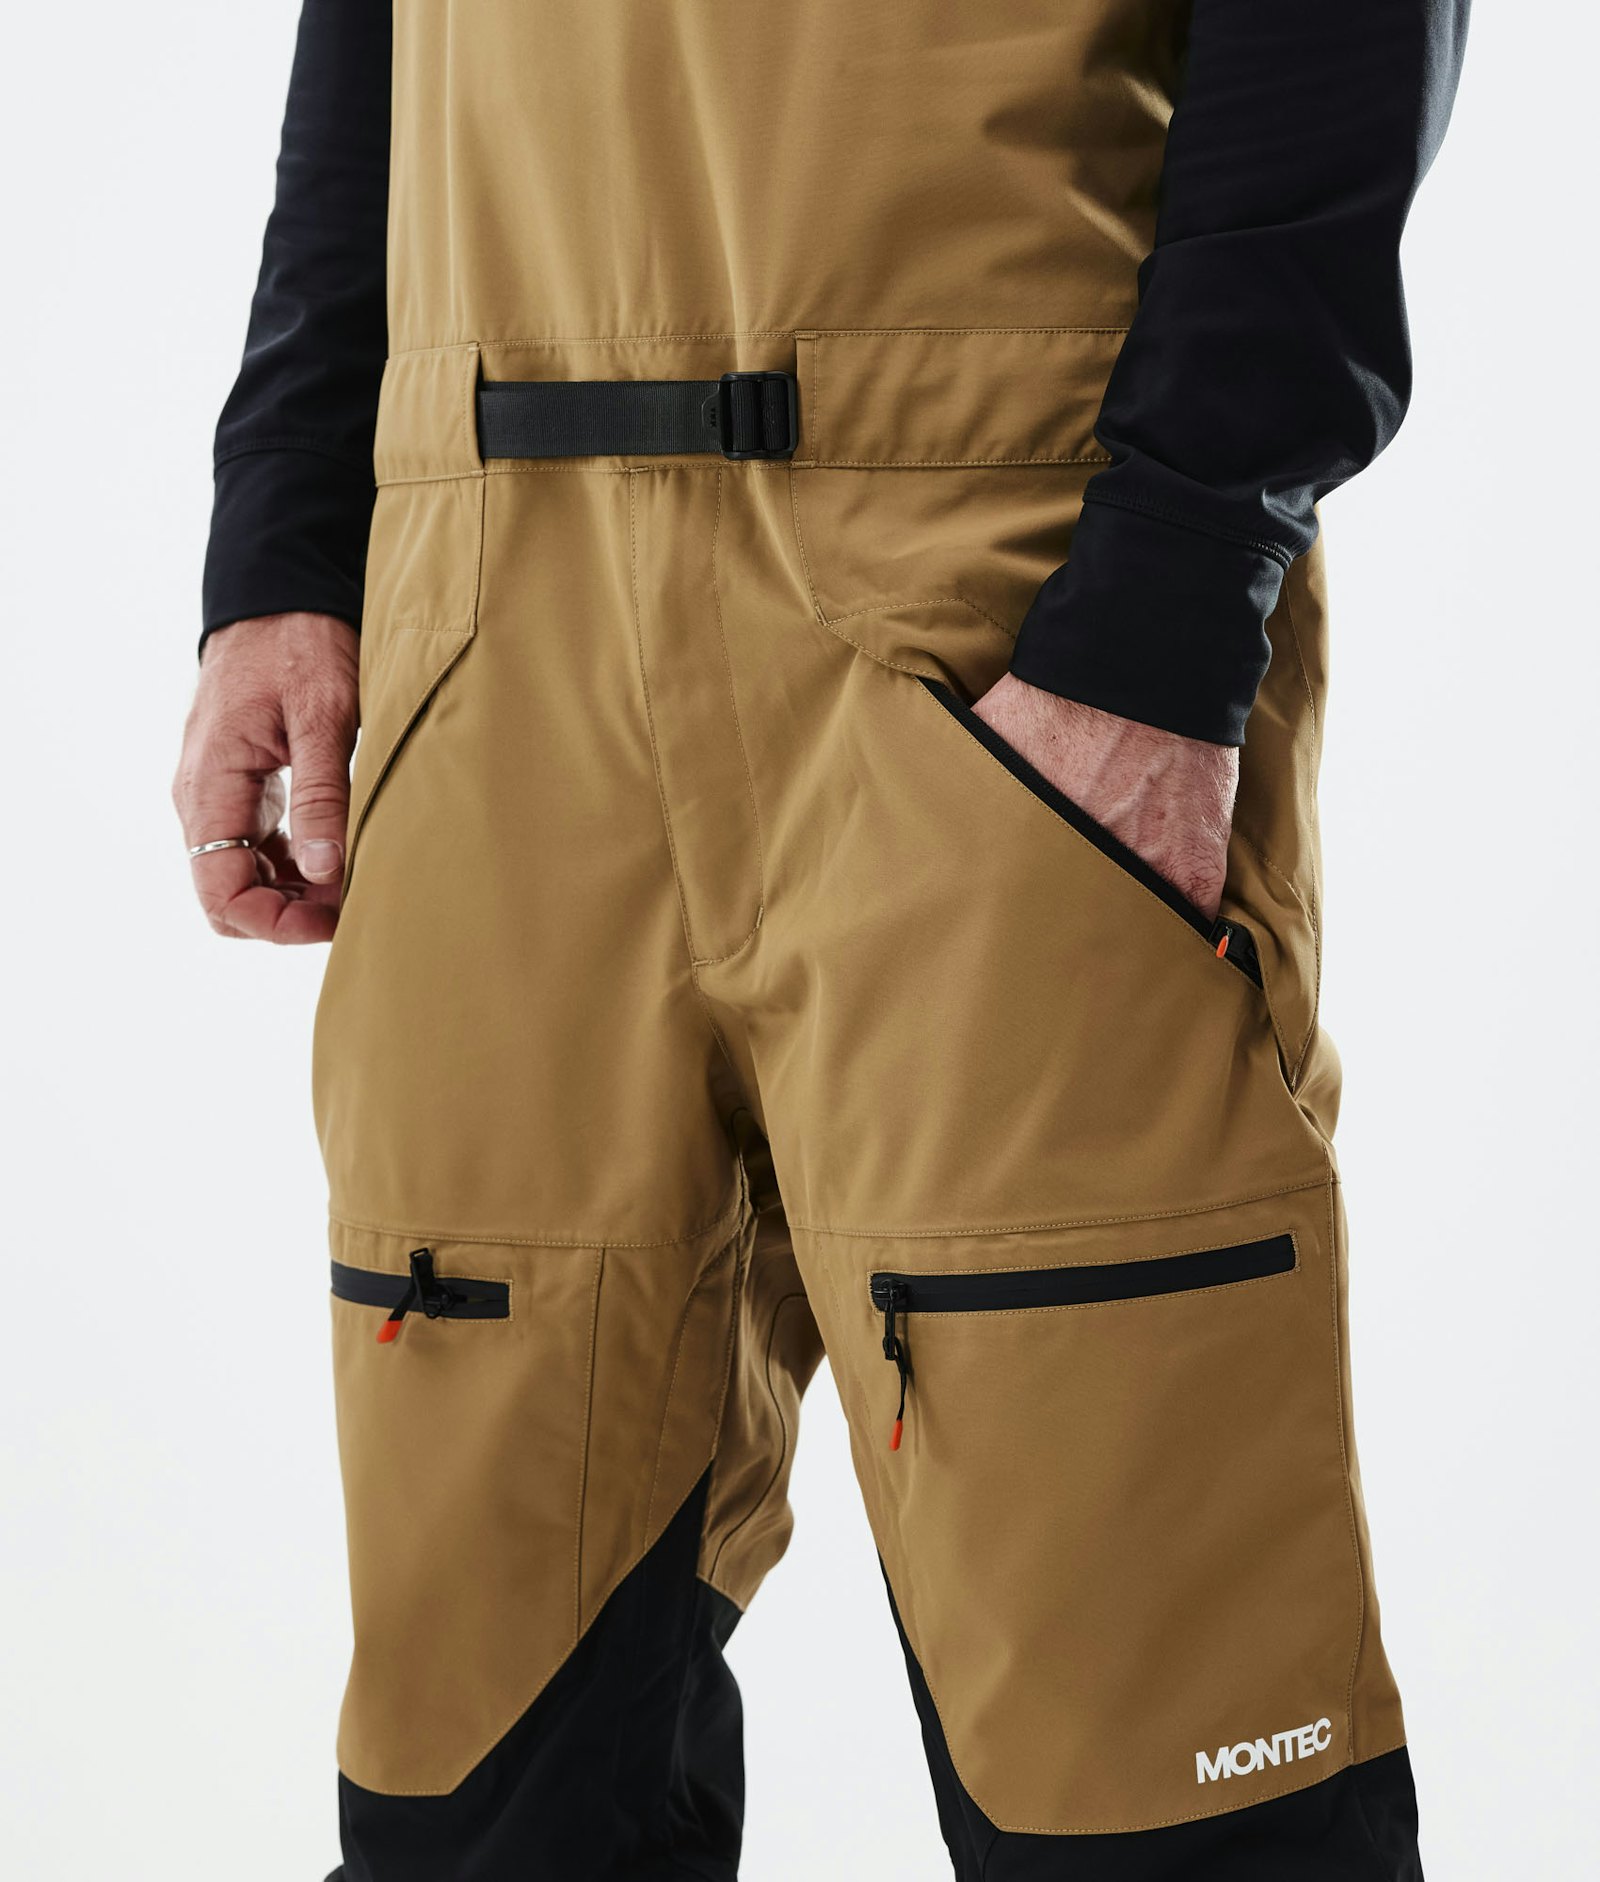 Moss 2021 Pantalon de Snowboard Homme Gold/Black